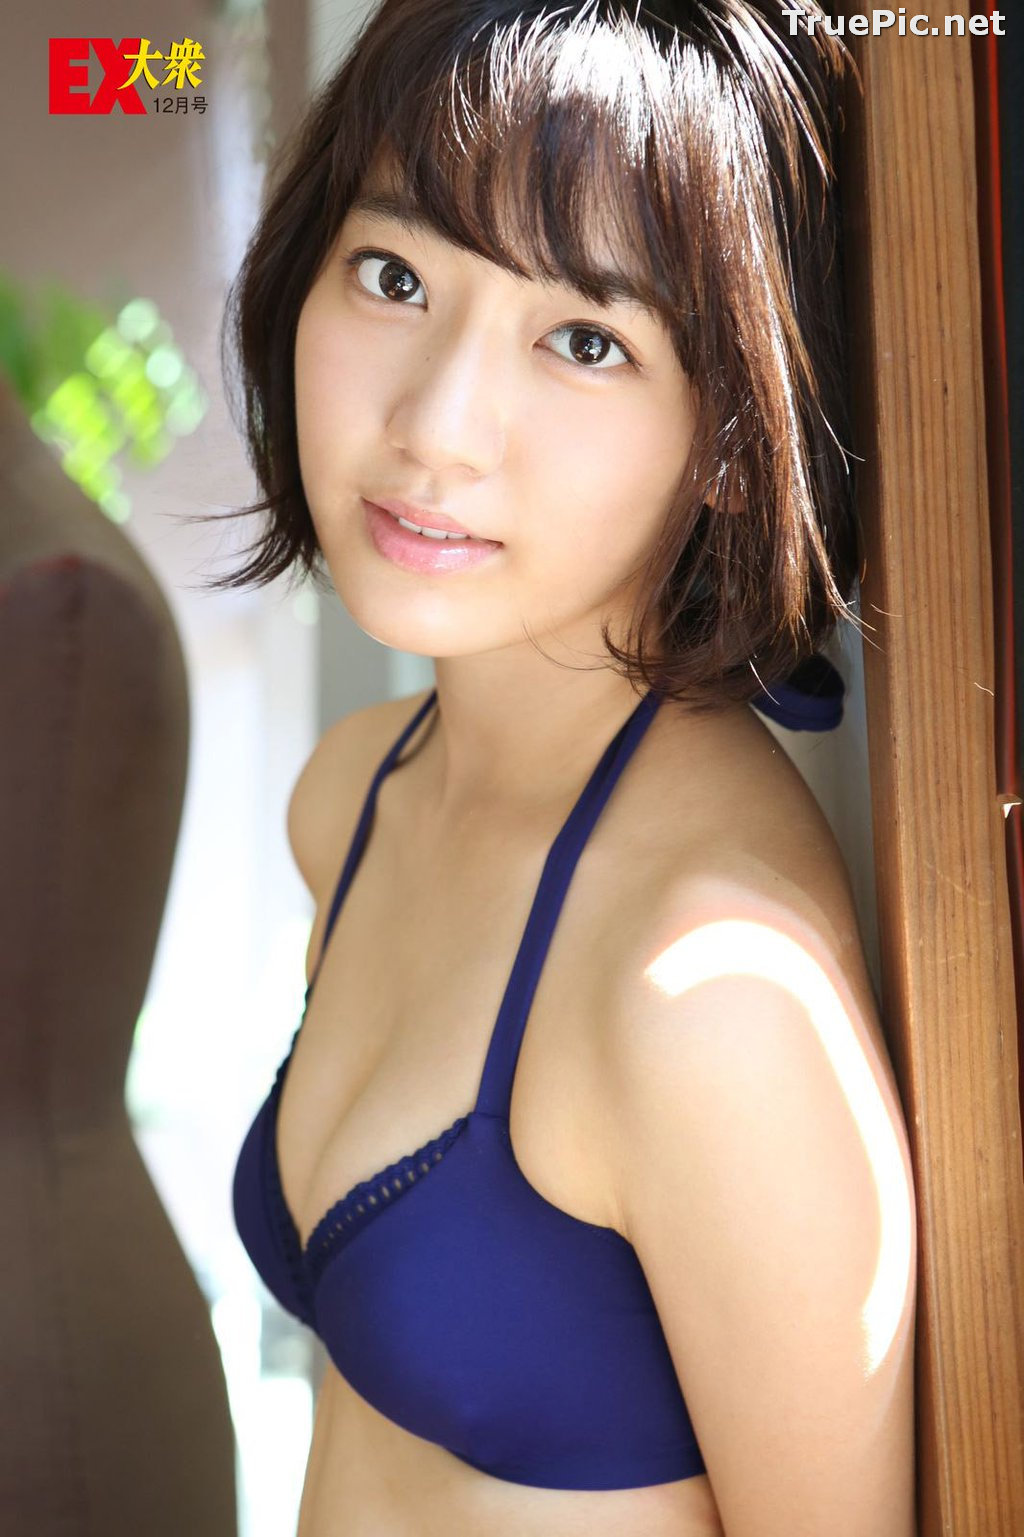 Image Japanese Singer and Actress - Sakura Miyawaki (宮脇咲良) - Sexy Picture Collection 2021 - TruePic.net - Picture-246